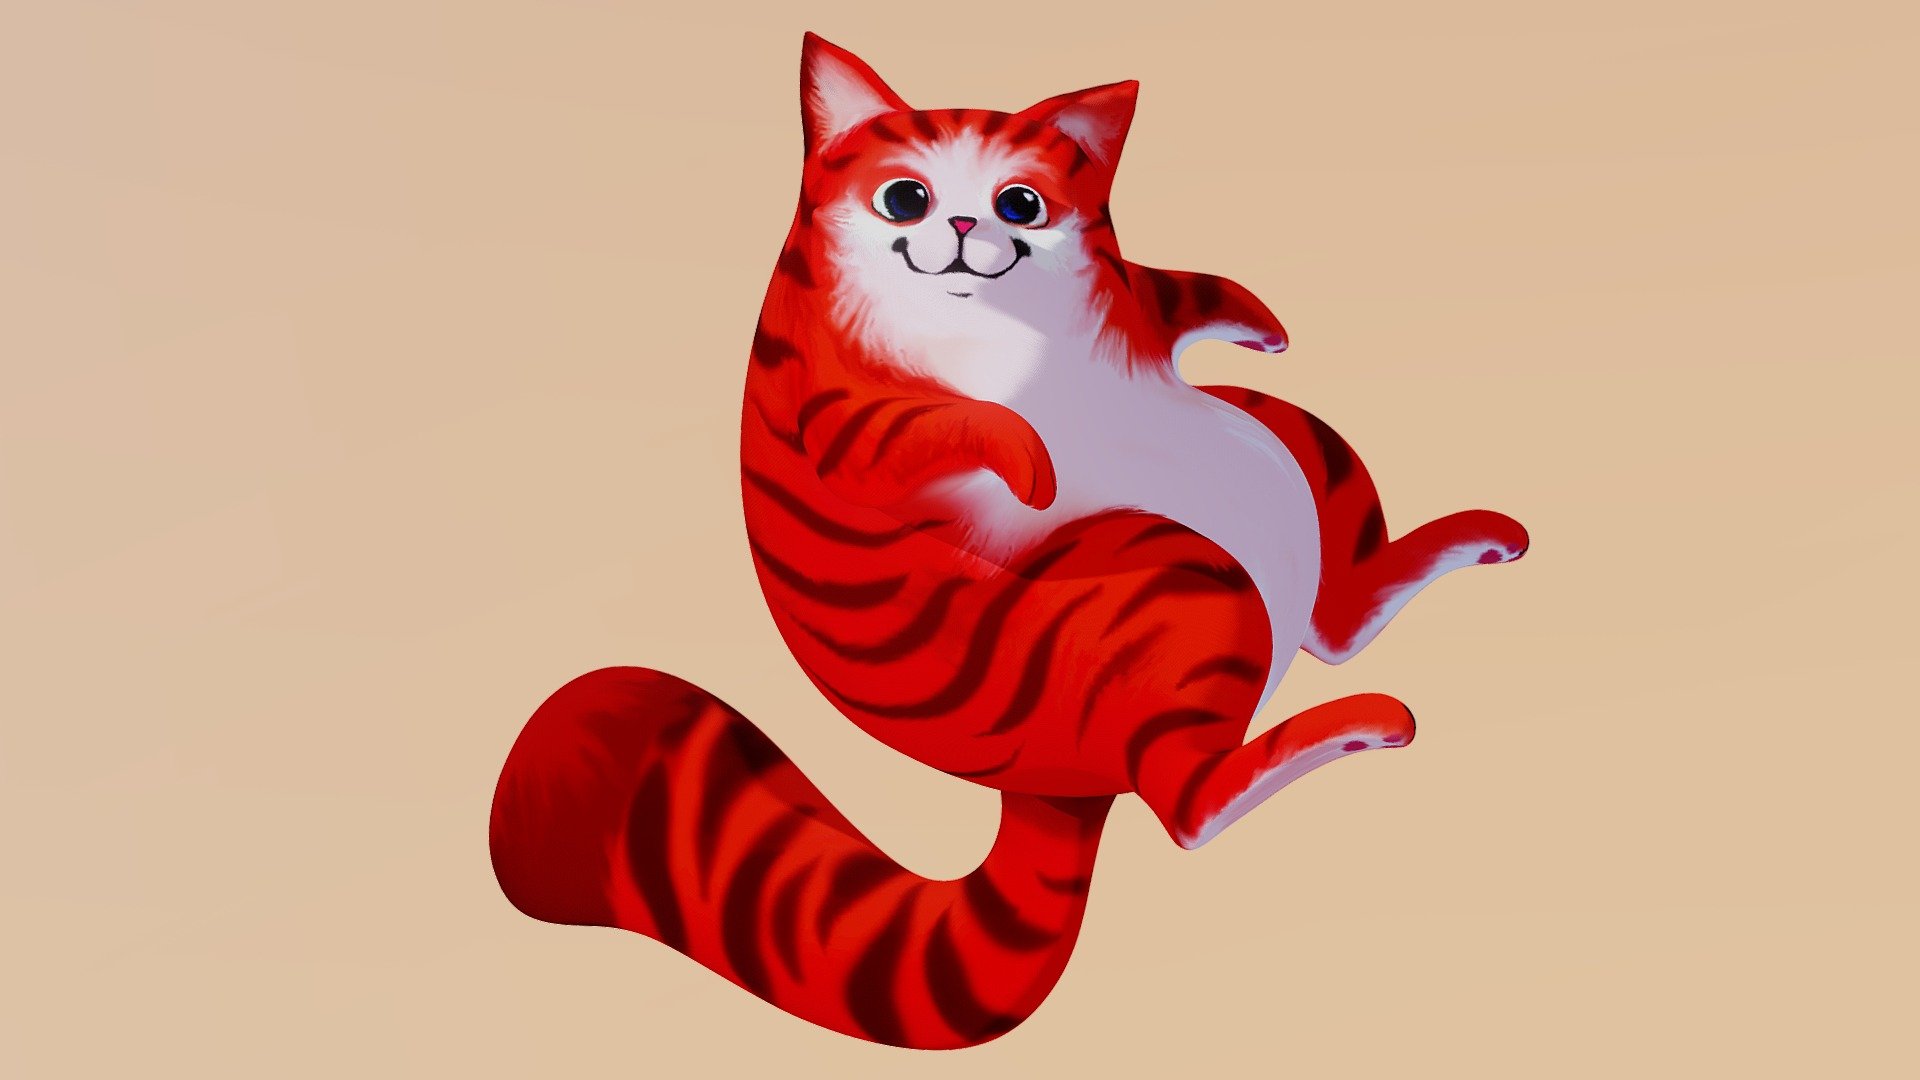 Cute cat sculpted in Blender

Full process : https://youtu.be/Dsfl7WF3caA

Blender #sculpting - Cat - Buy Royalty Free 3D model by Robin Art FX (@robinsonartfx) 3d model